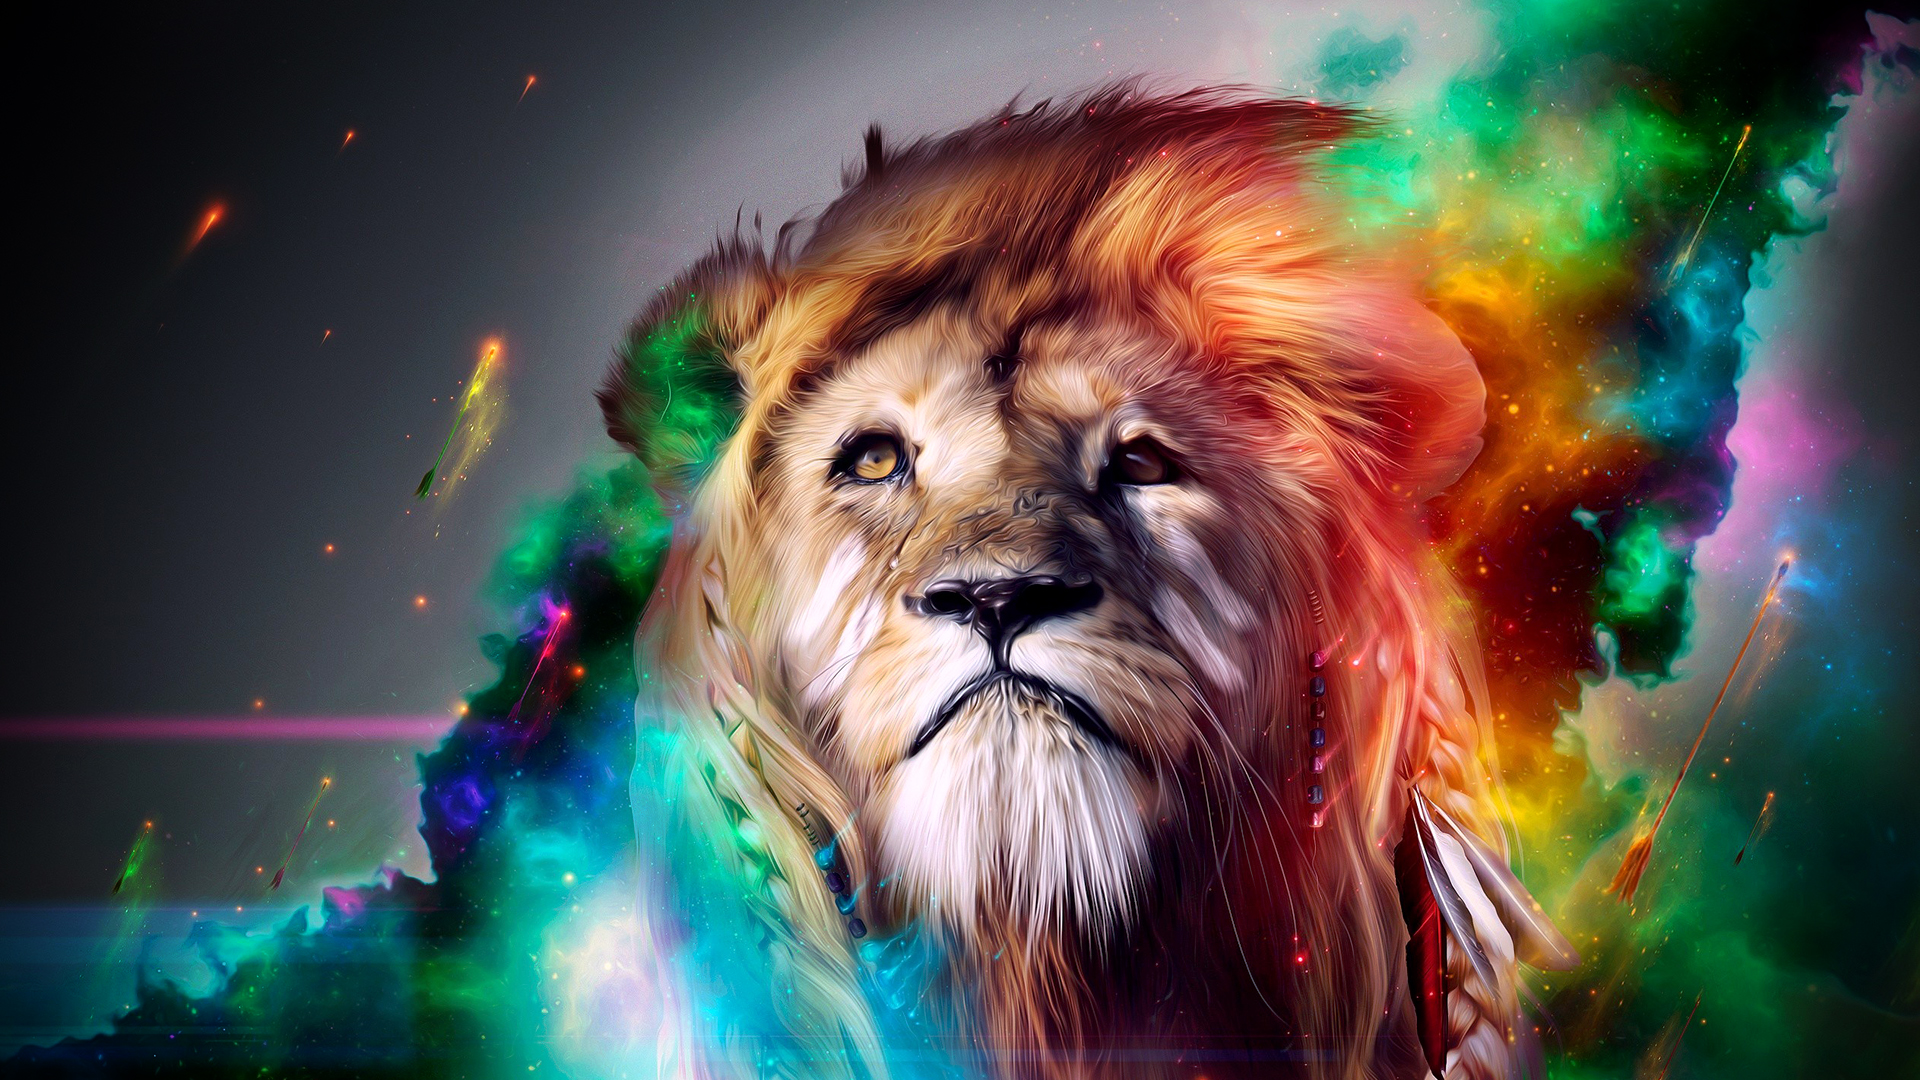 Artistic Colorful Lion Desktop HD Wallpaper Stylish